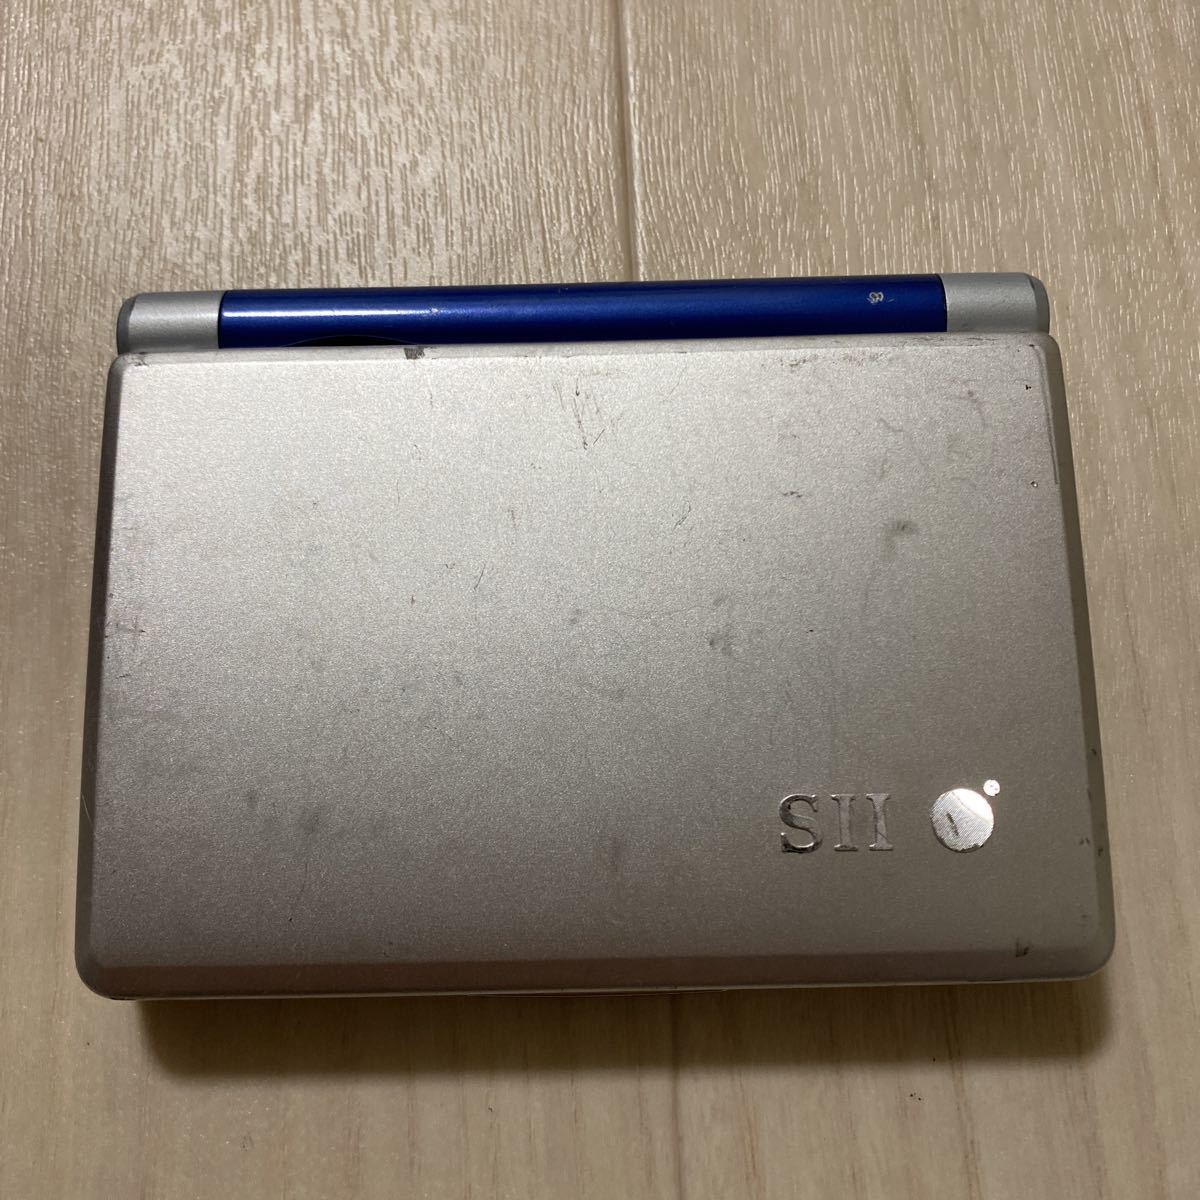 SEIKO SII IC DICTIONARY SR-MK4100 セイコー コンパクトモデル 電子辞書 単四電池 J346